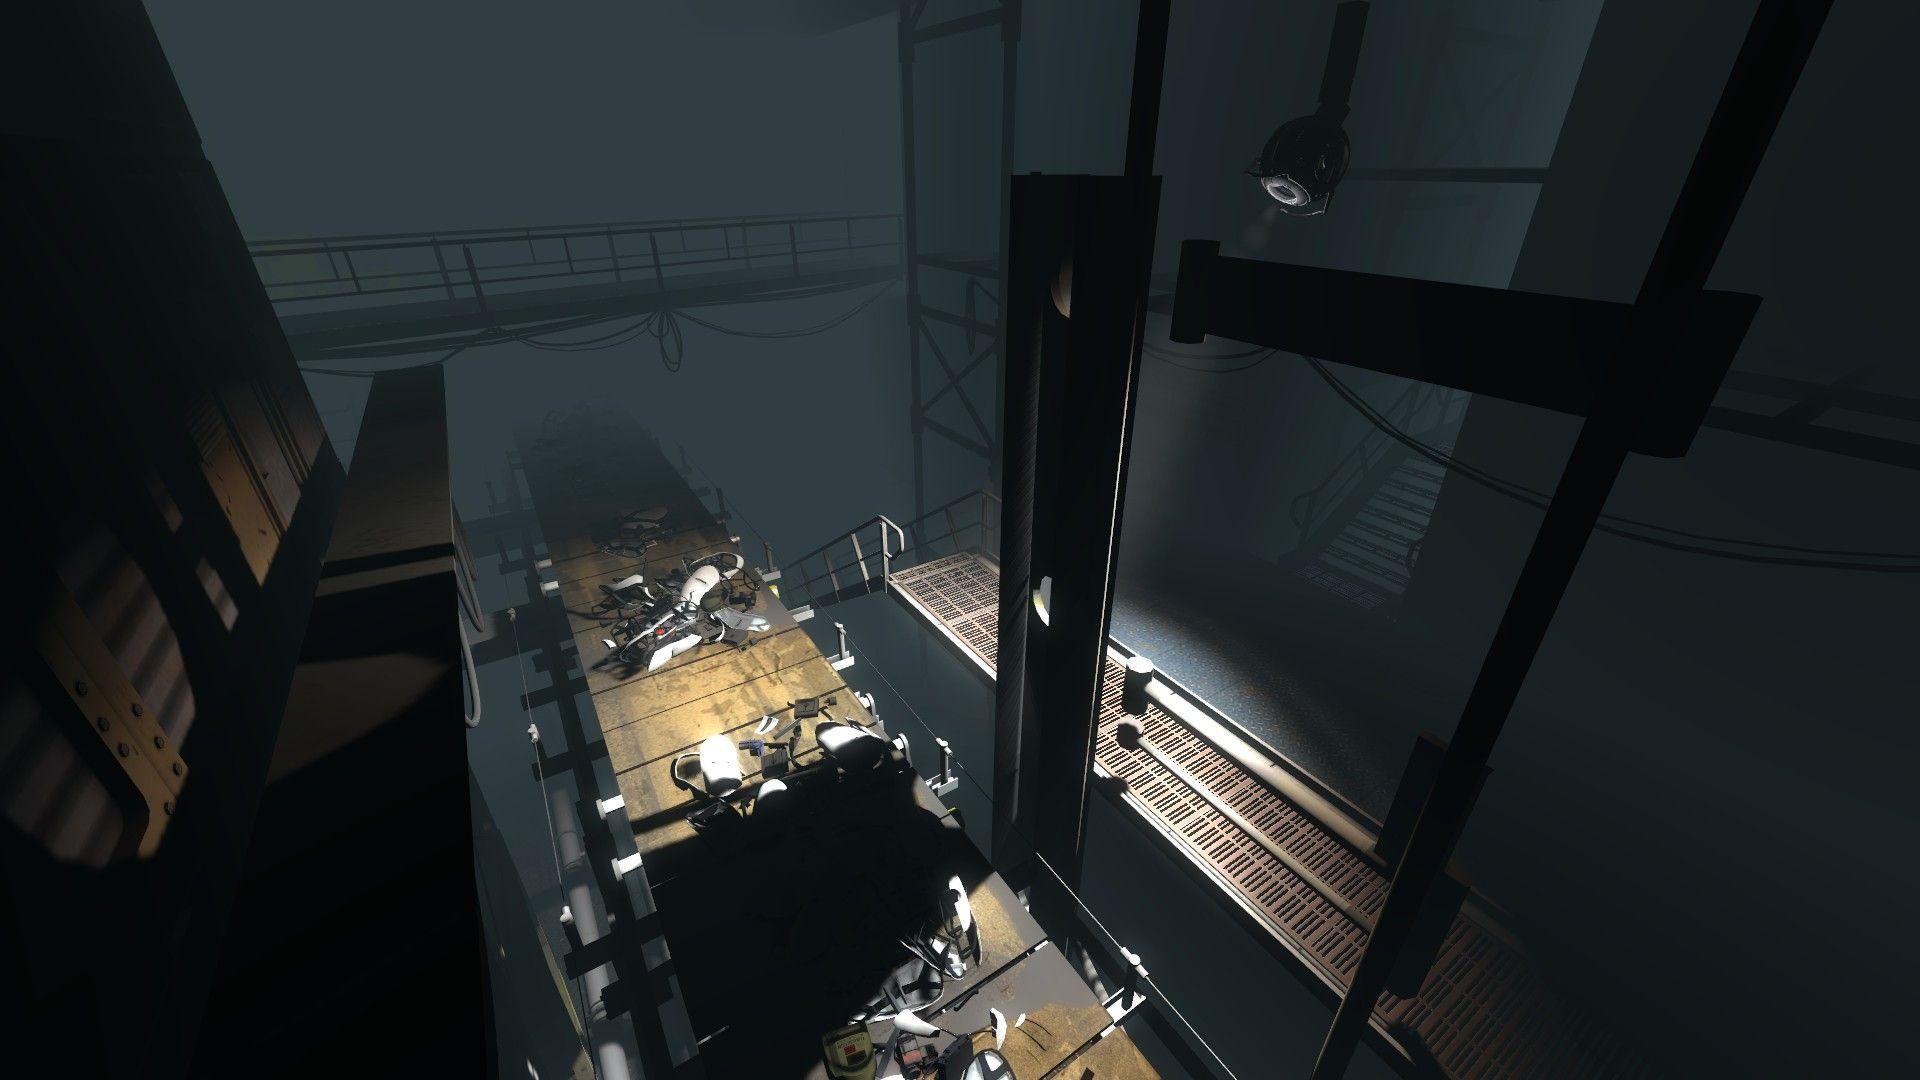 Screenshot №10 from game Portal 2